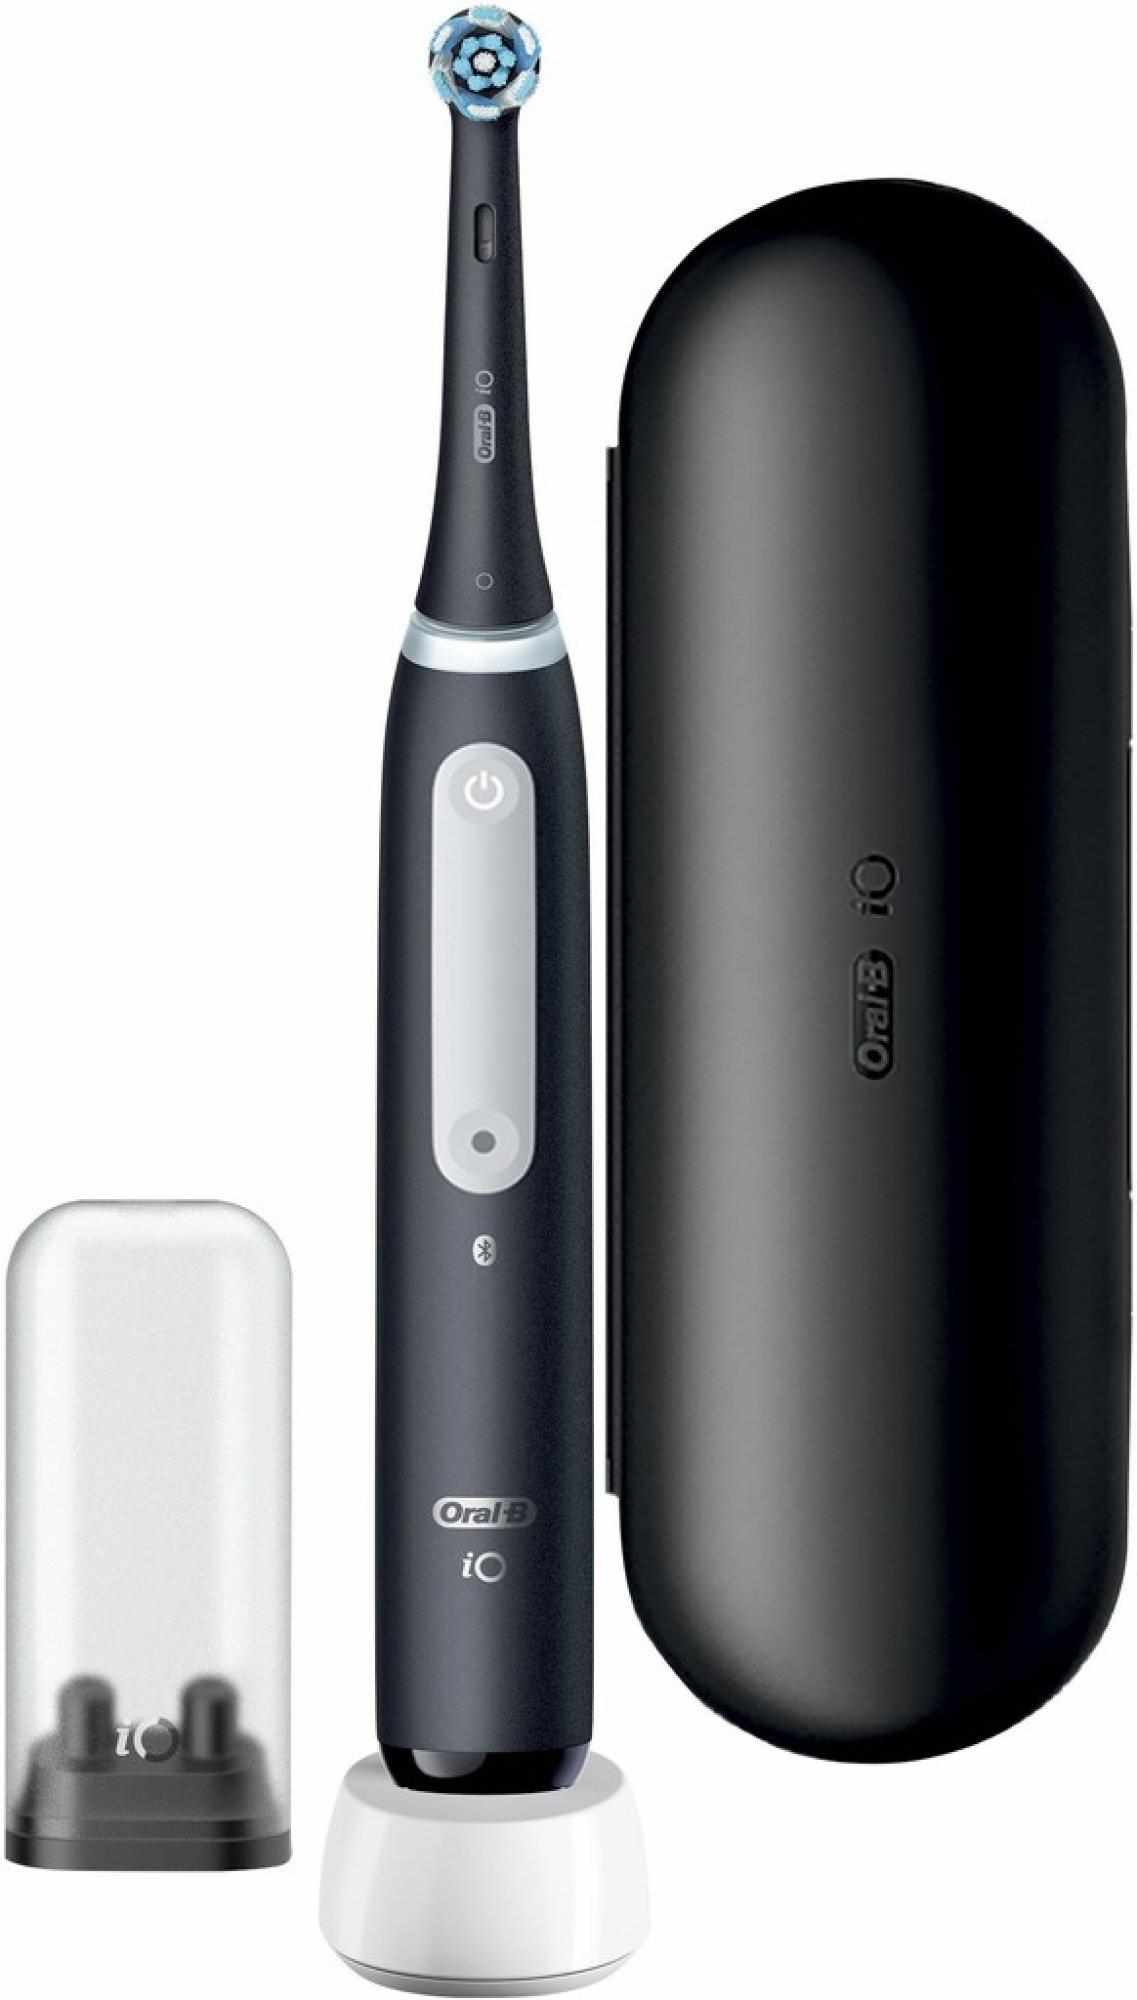 Oral-B iO Series 4 Matt Black elektrický zubní kartáček,  magnetický,  časovač,  tlakový senzor,  mobilní aplikace,  černý1 